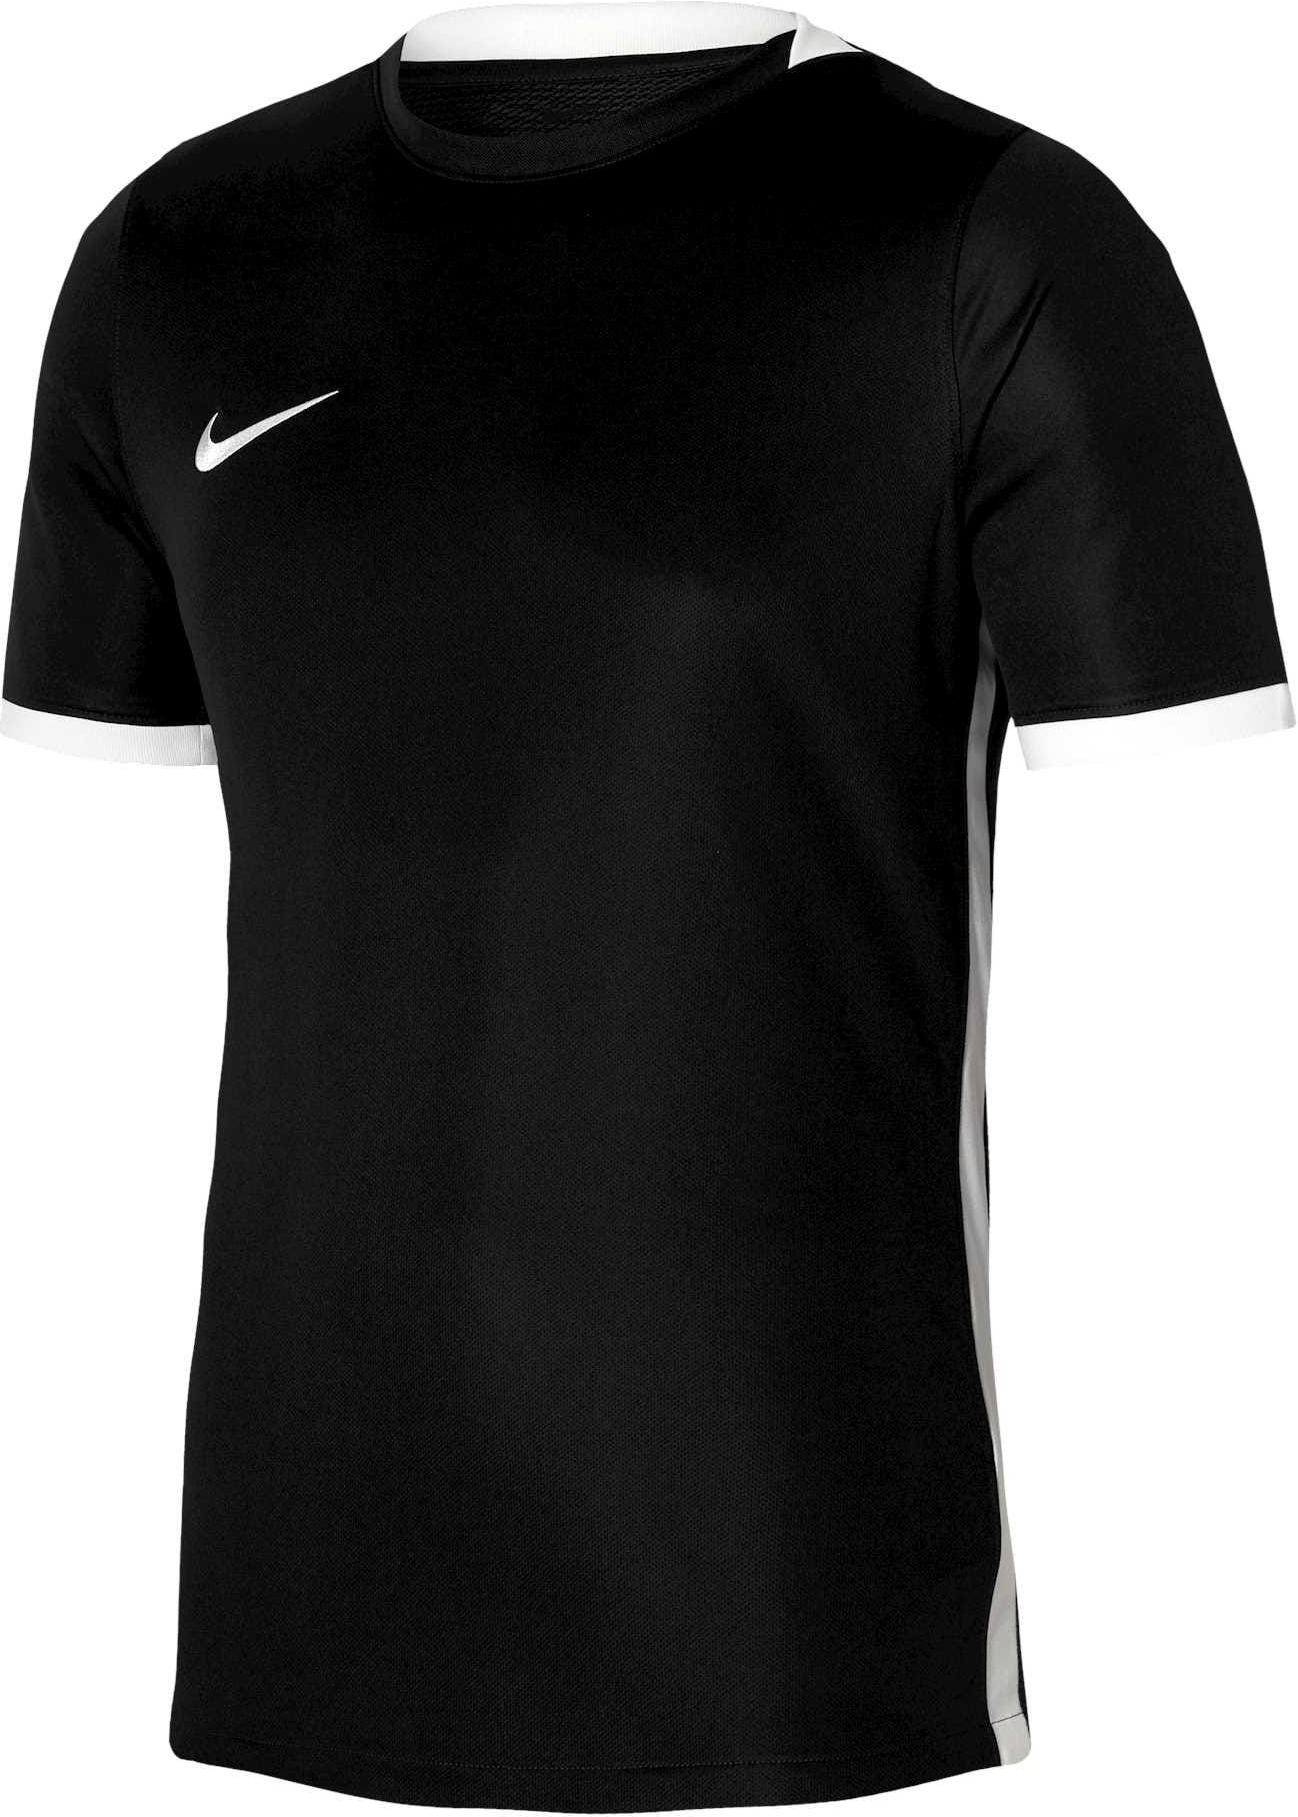 Nike Dri-FIT Challenge 4 Men s Soccer Jersey